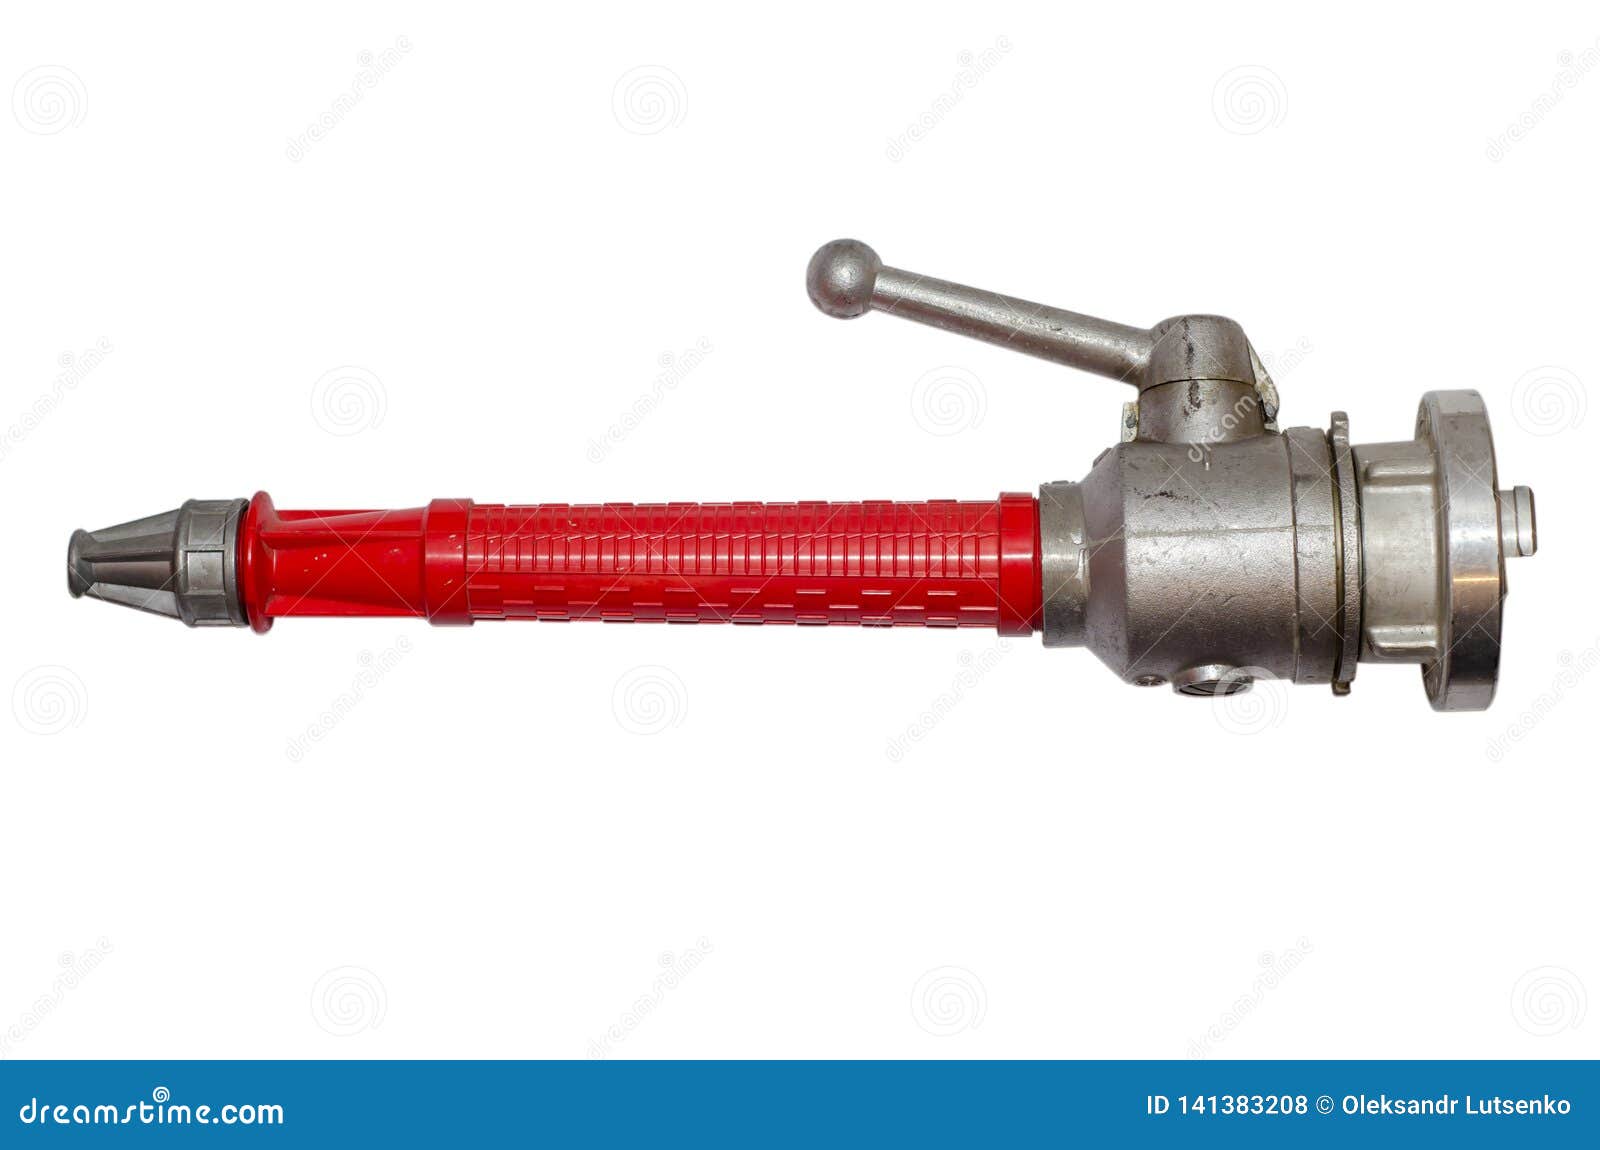 Plastic Fire Hose Nozzle with Aluminium Storz Coupling Stock Photo - Image  of background, high: 141383208